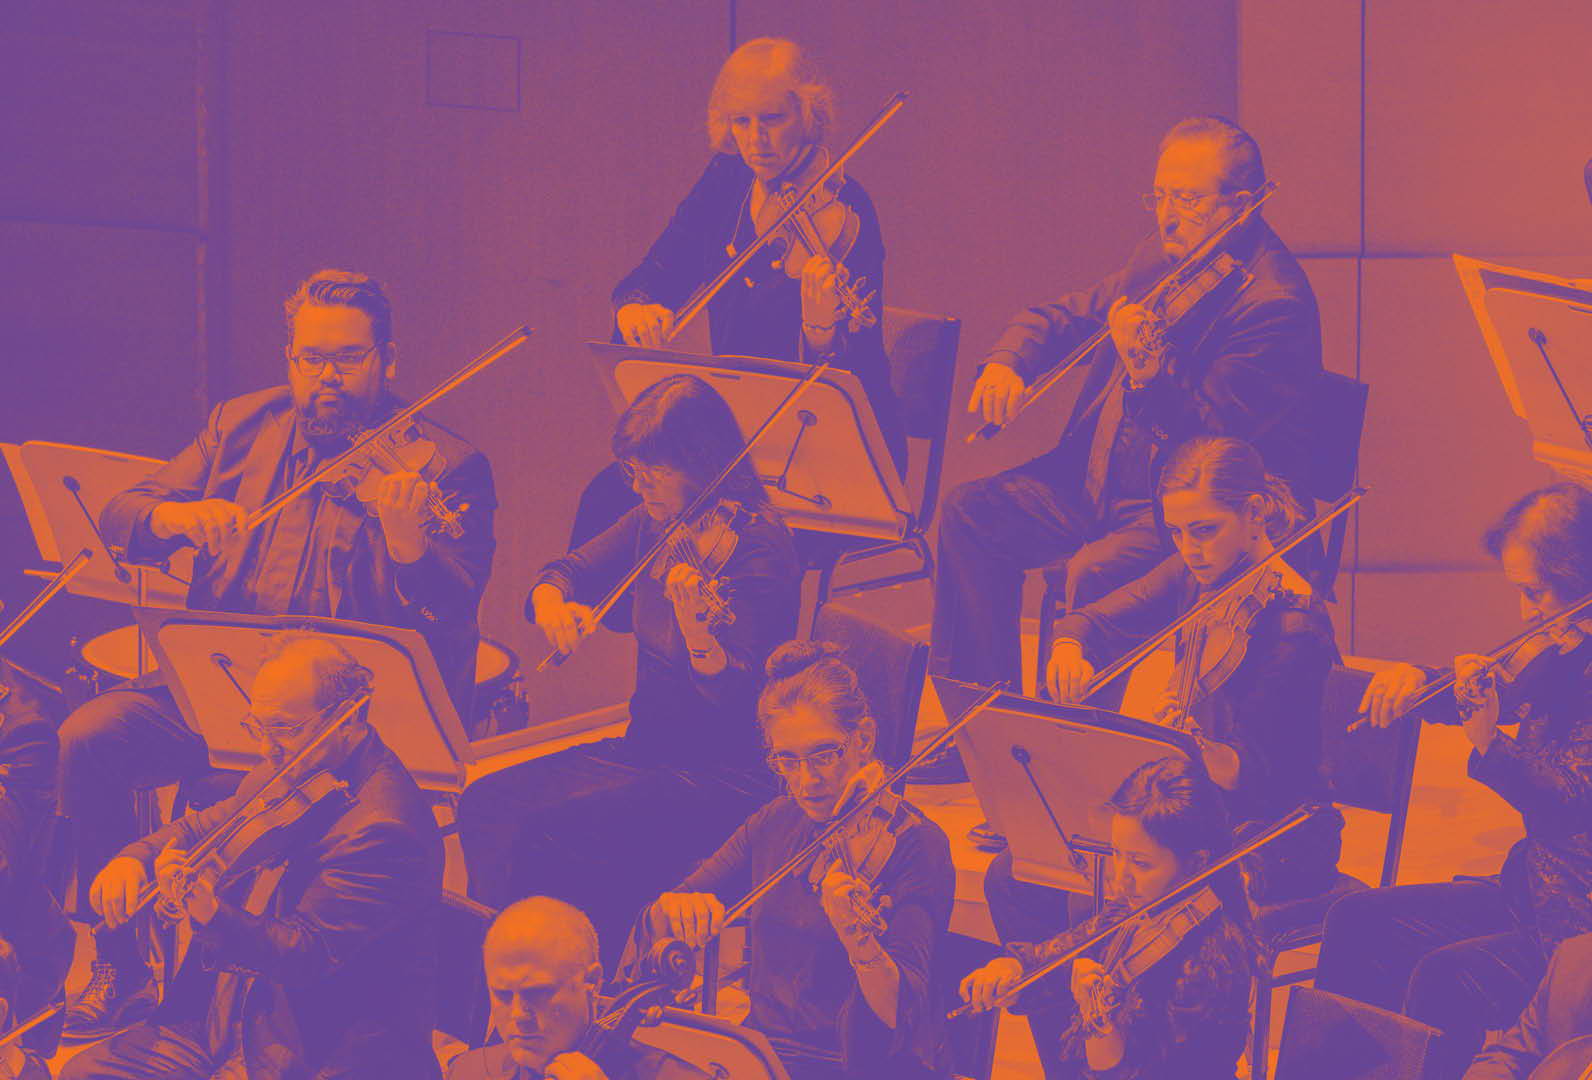 symphony orchestra wallpaper